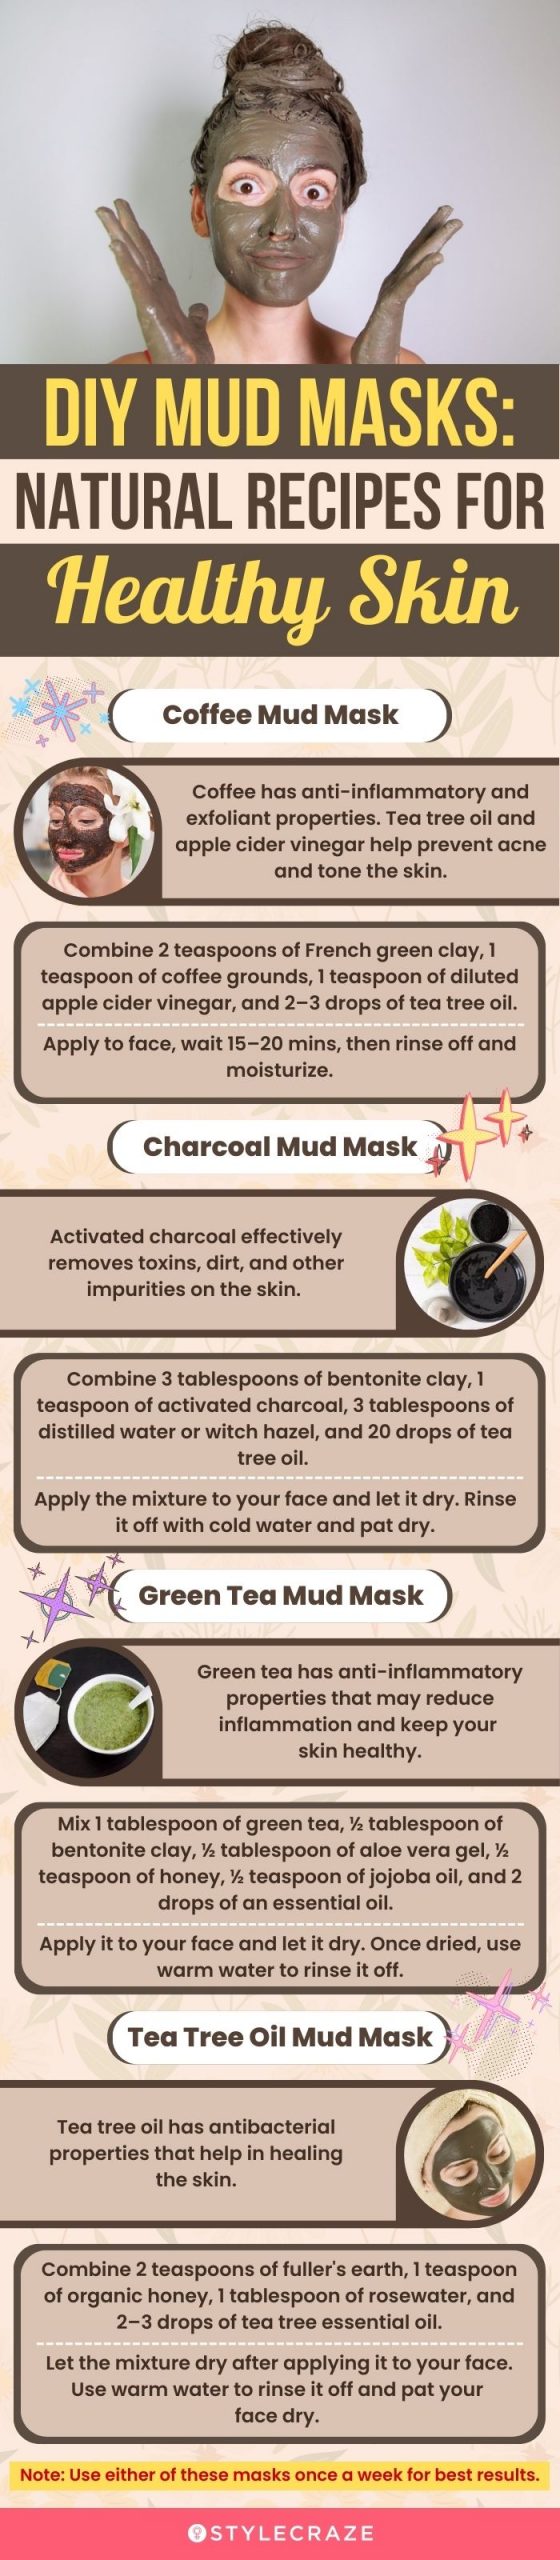 diy mud masks natural recipes for healthy skin (infographic)